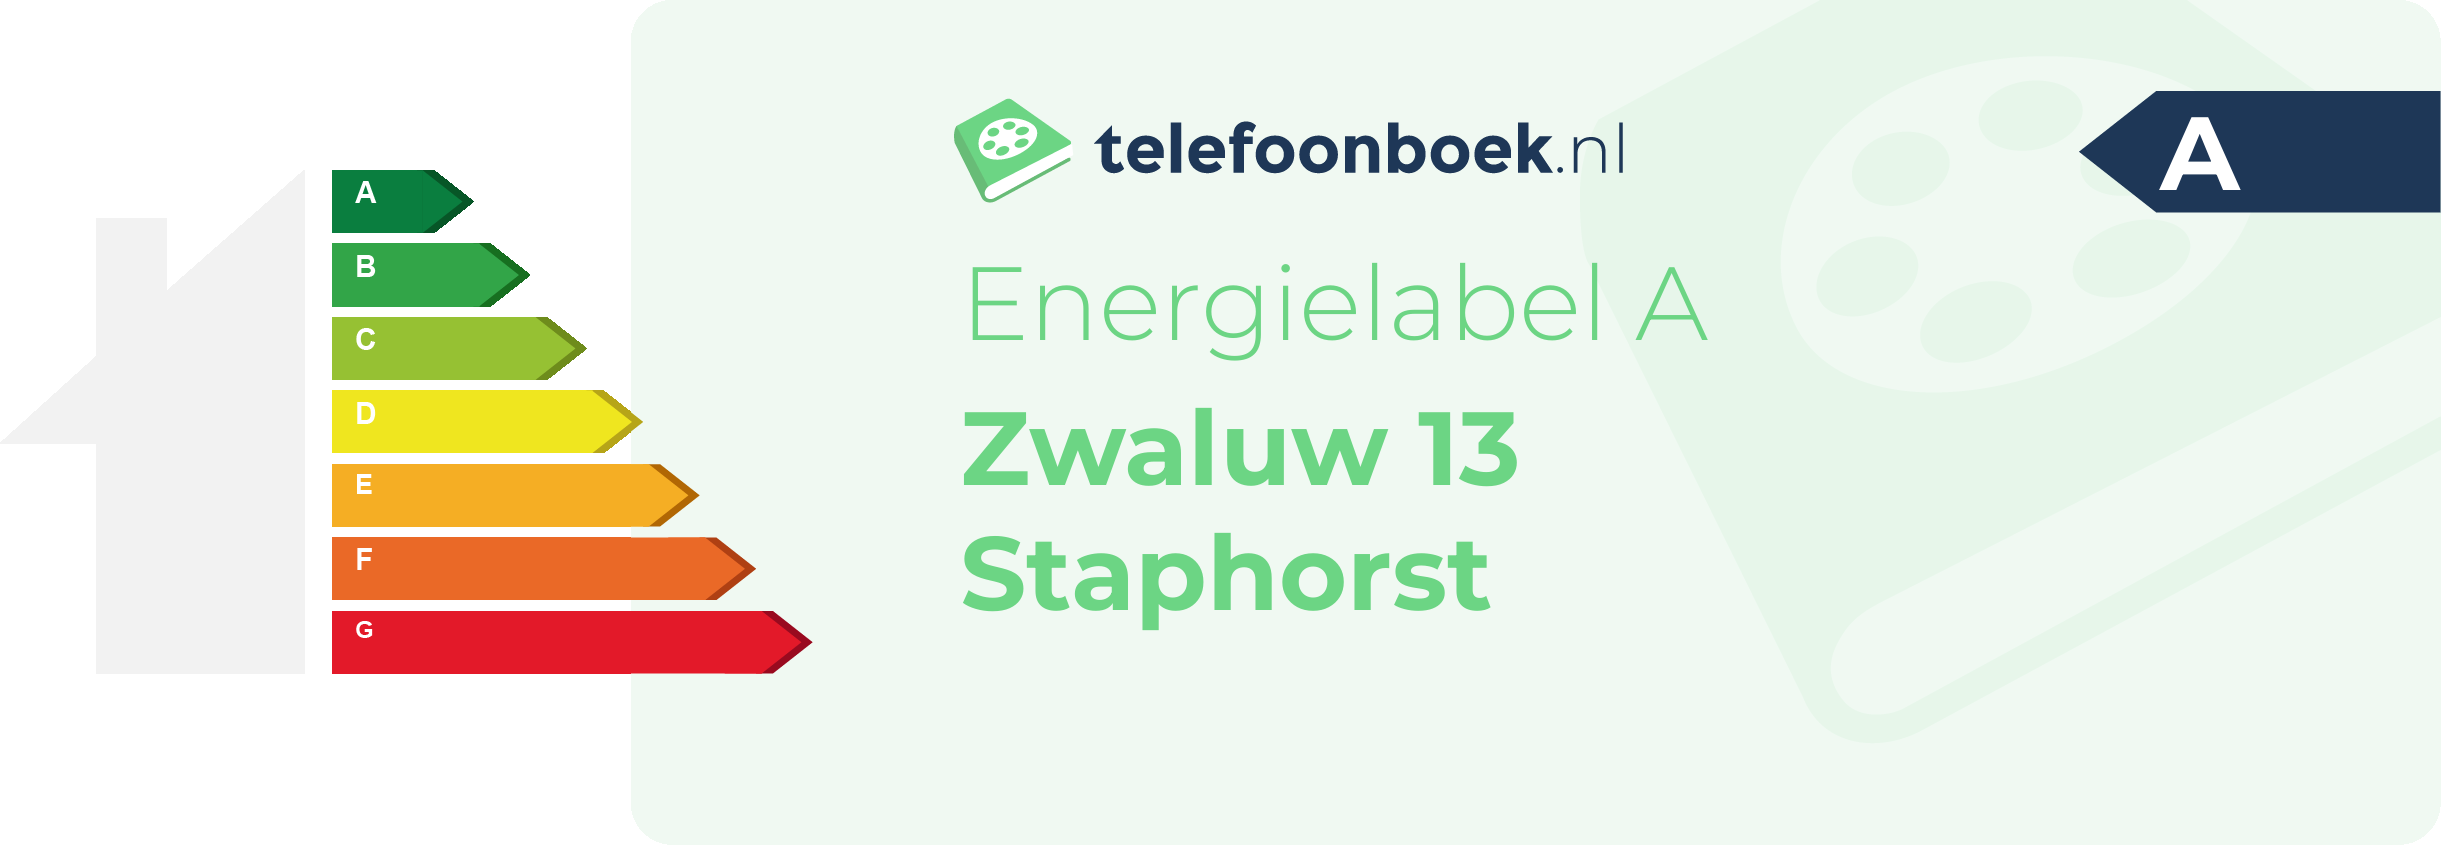 Energielabel Zwaluw 13 Staphorst